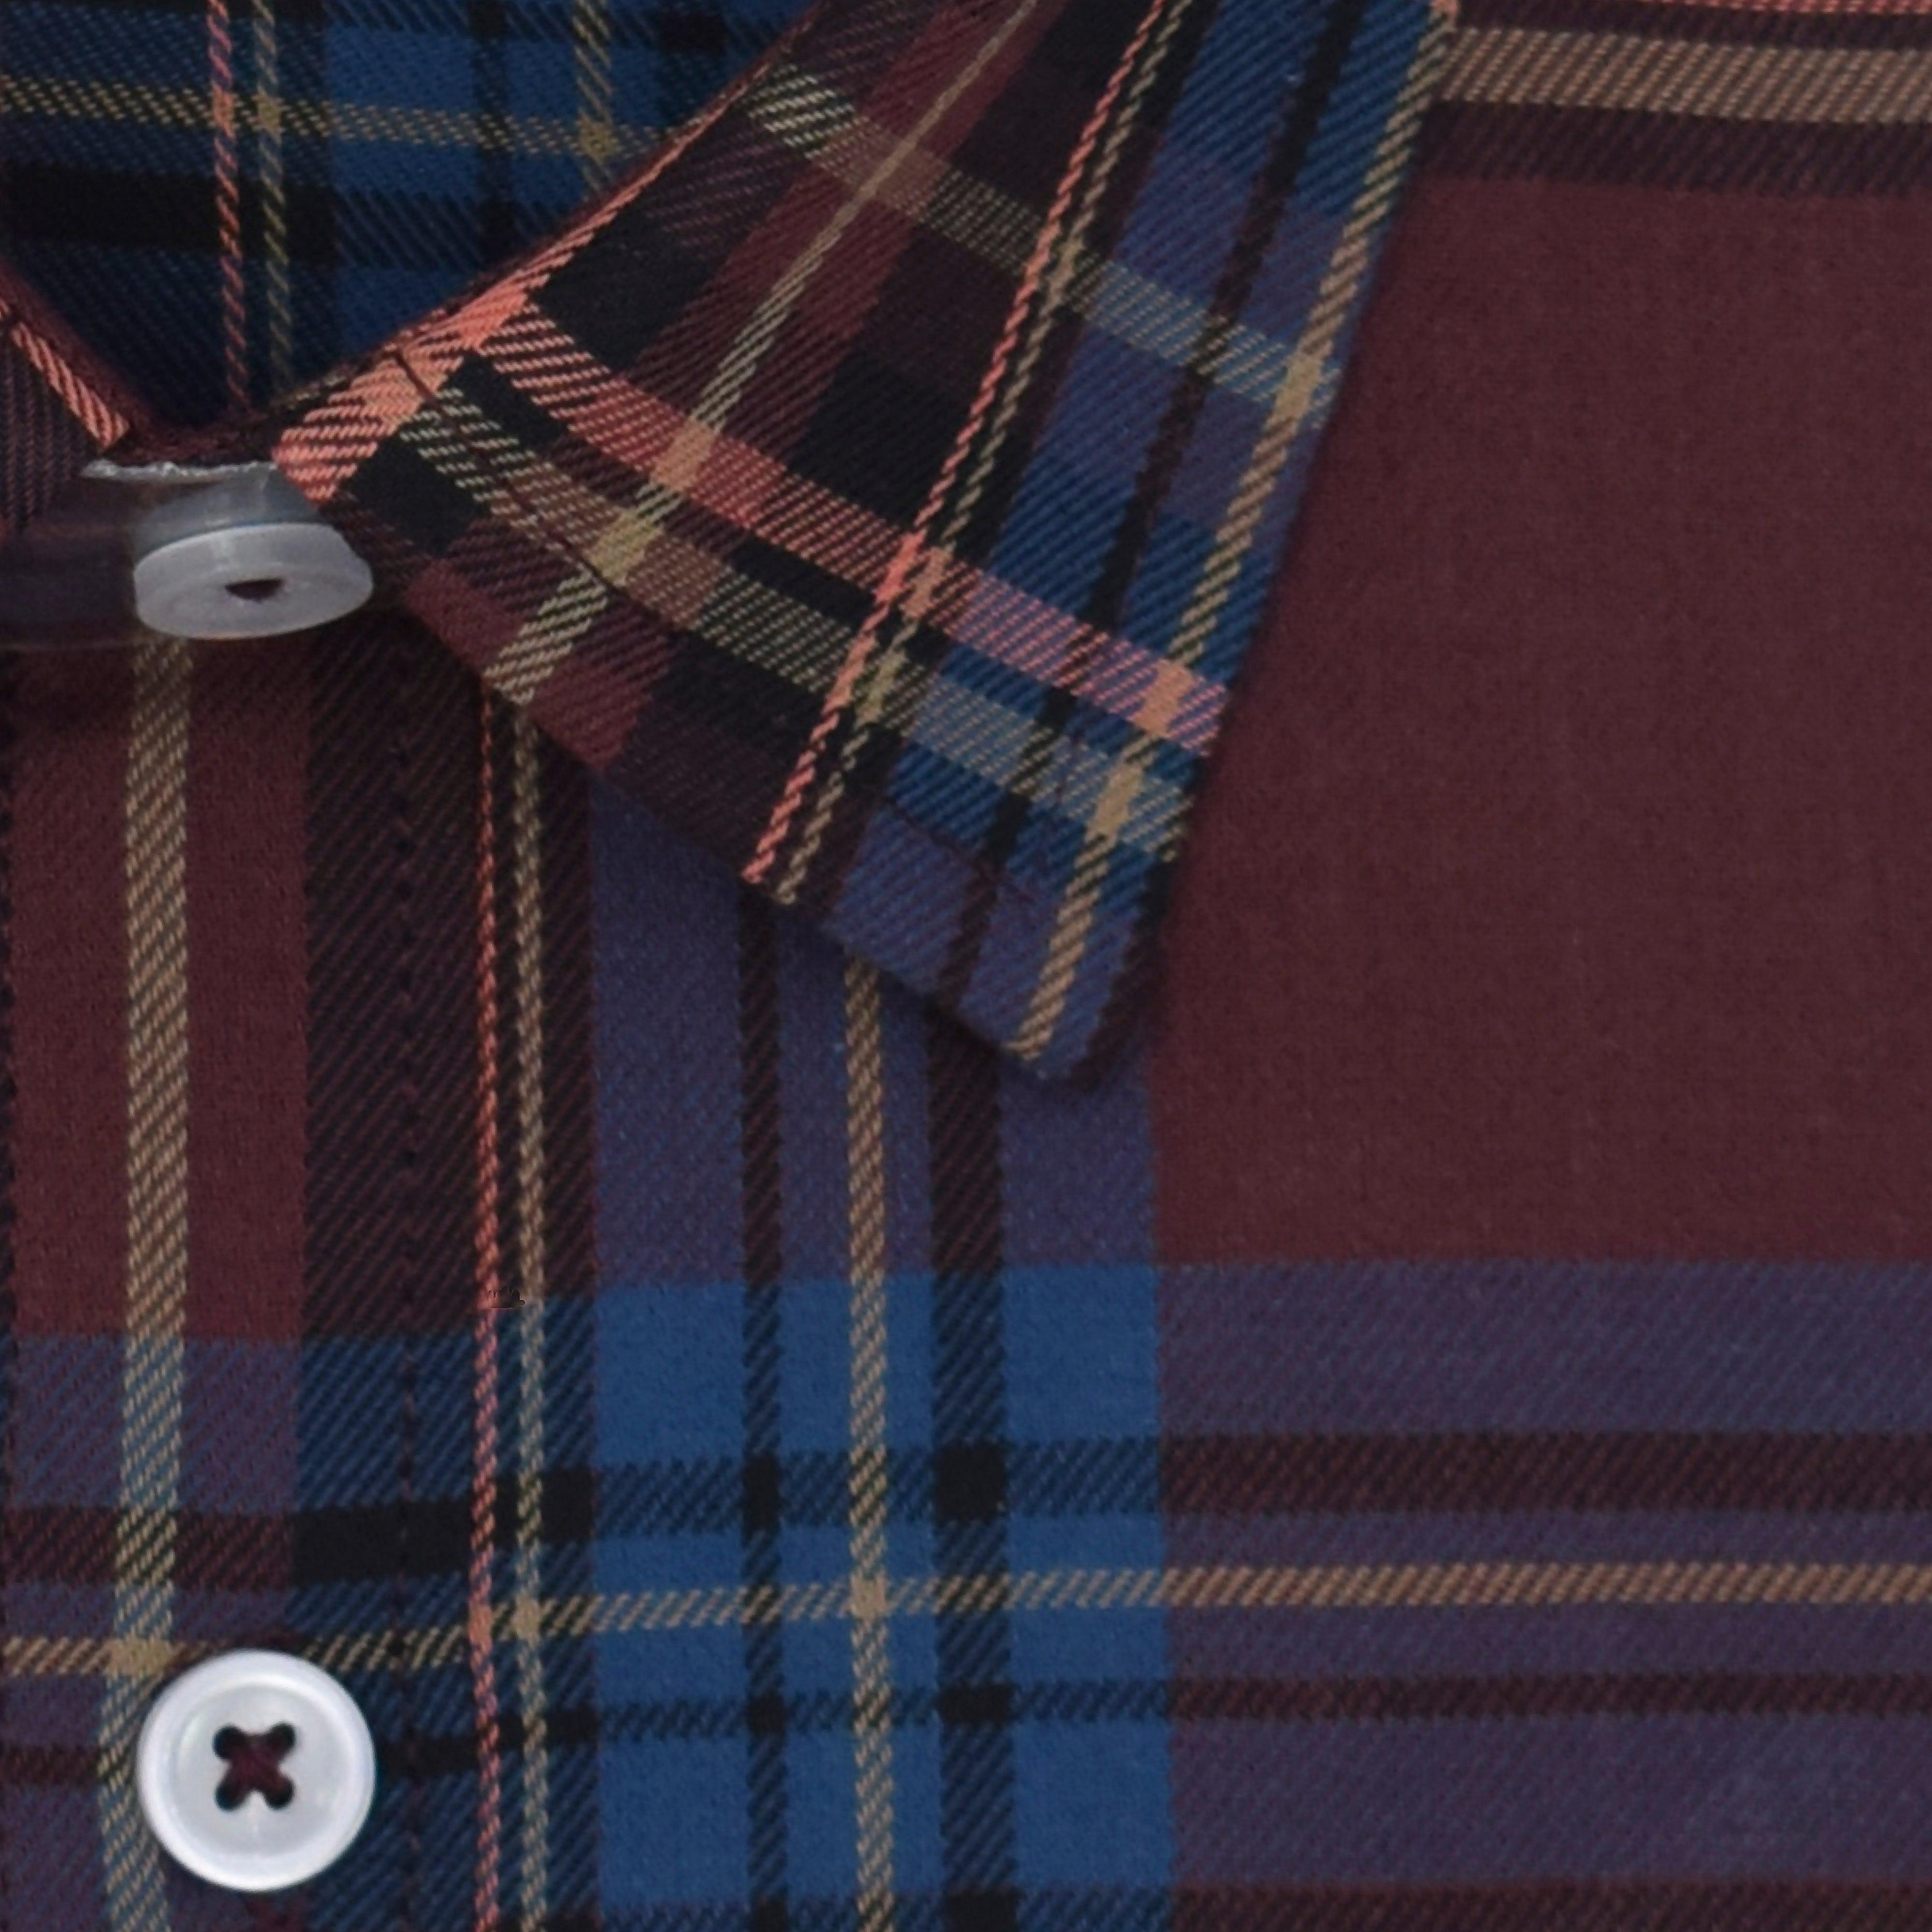 Men's 100% Cotton Madras Checkered Half Sleeves Shirt (Burgundy)